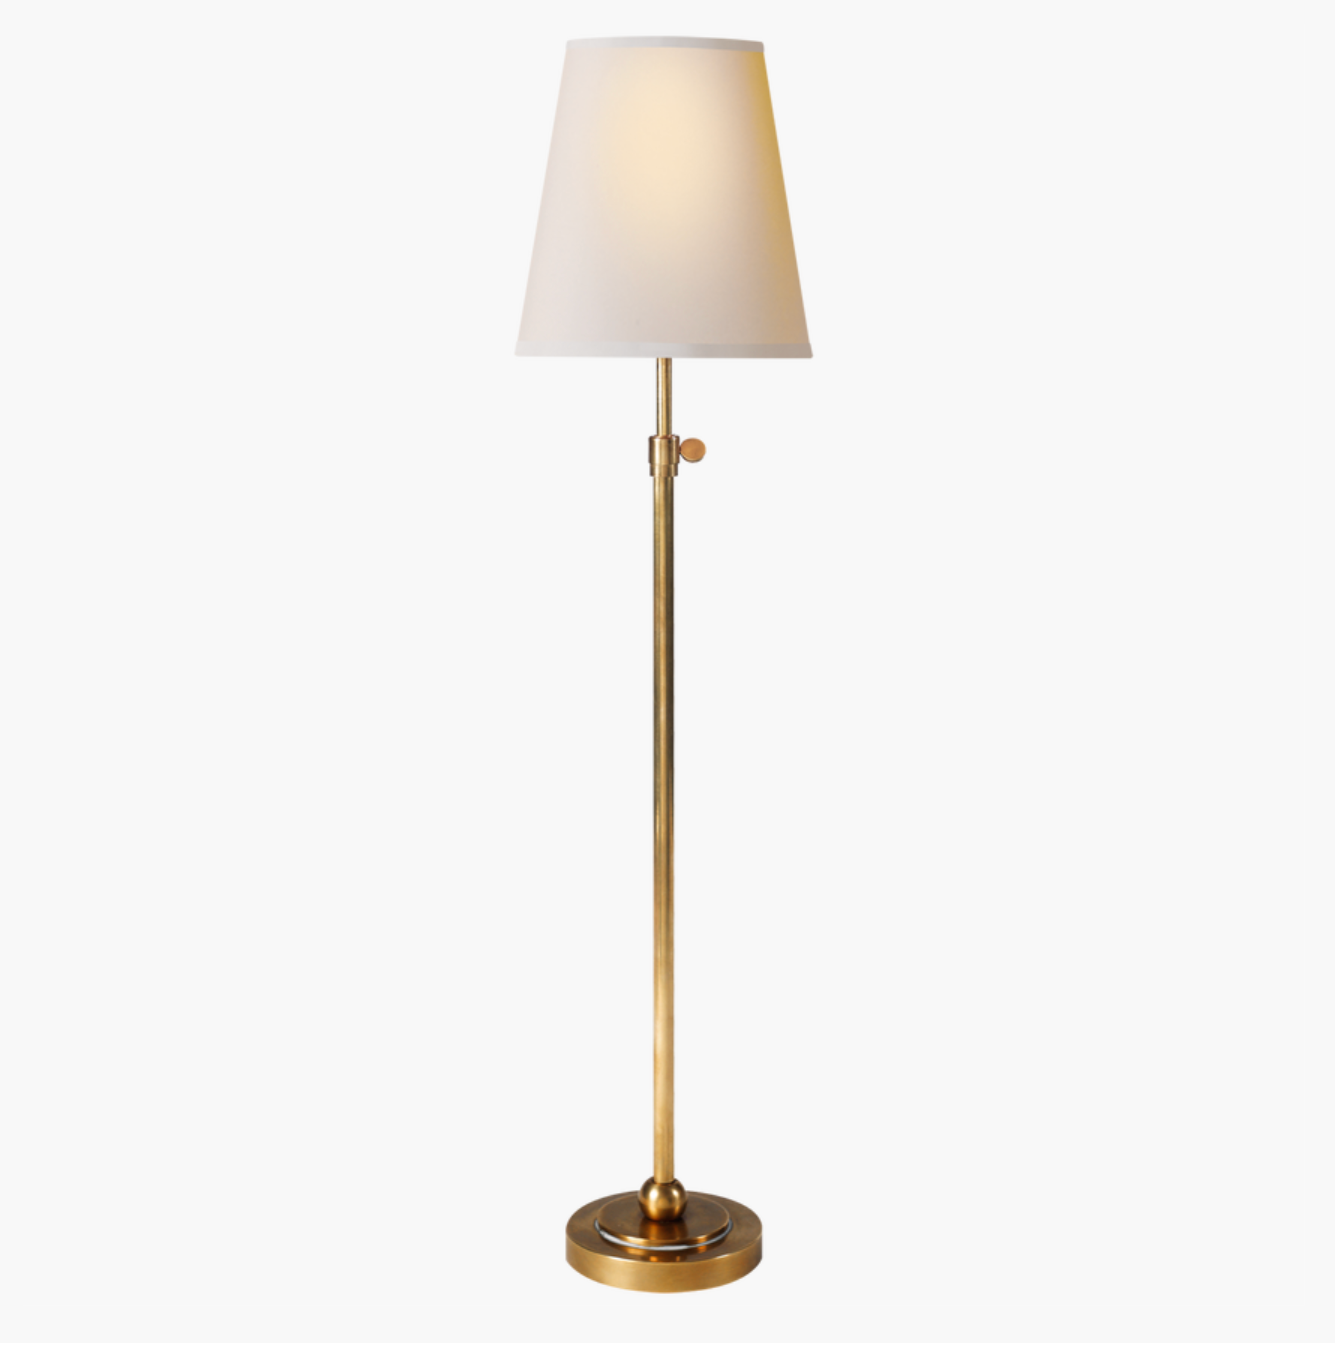 Visual Comfort & Co. brass lamp